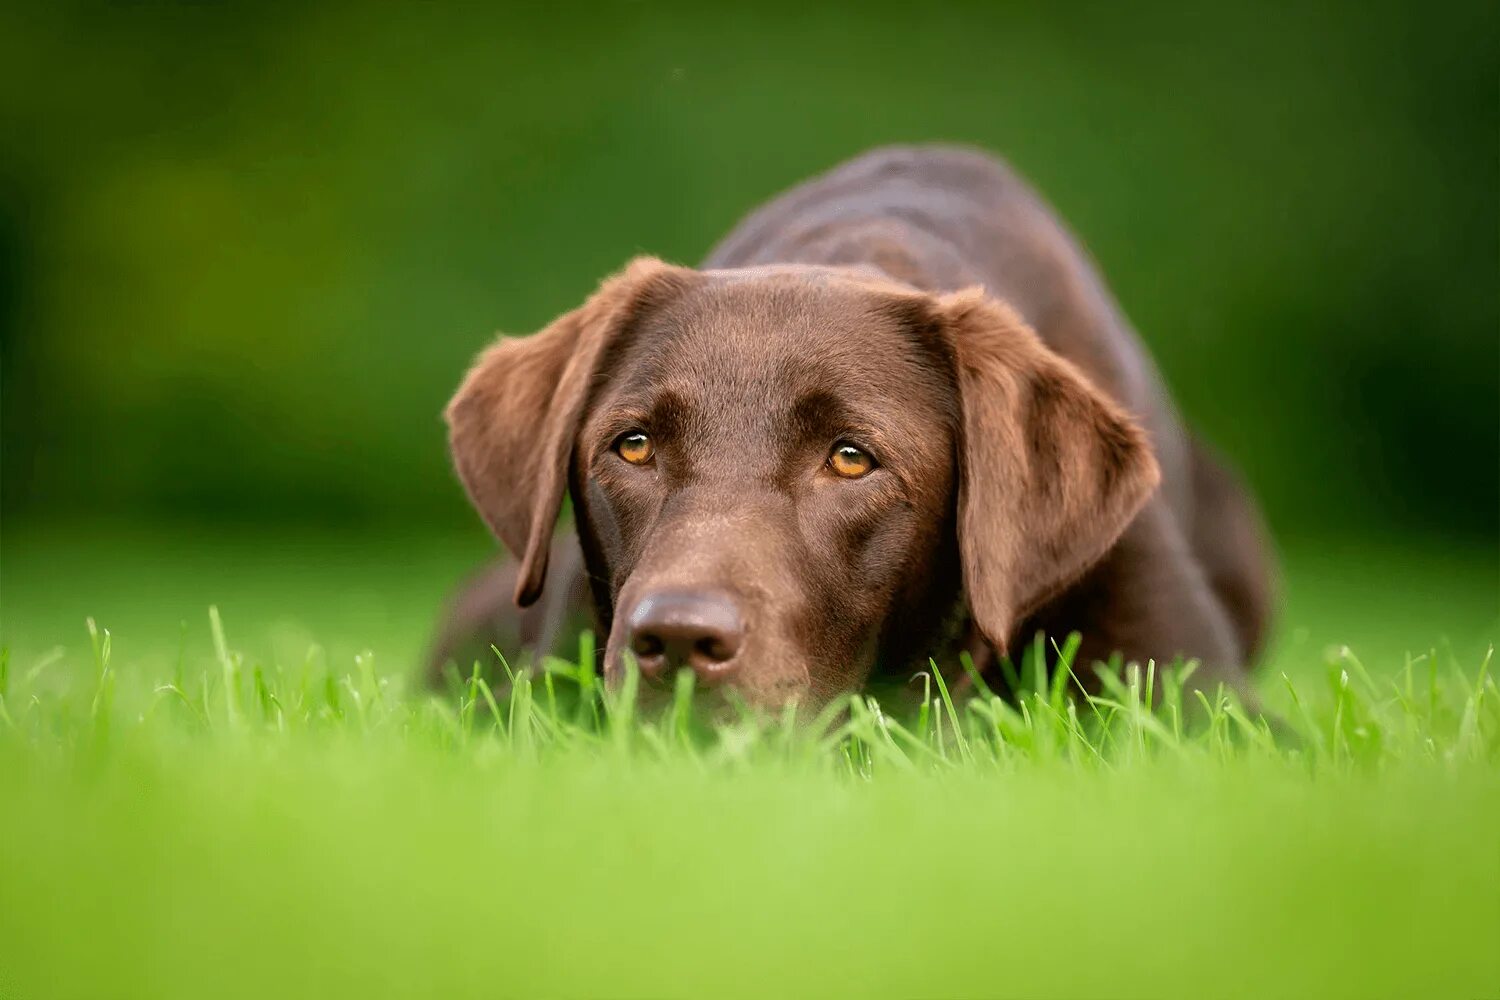 Порода собак лабрадор. Лабрадор на траве. Собака ест траву дома. Лабрадор черный заставка. Зачем собаки едят траву